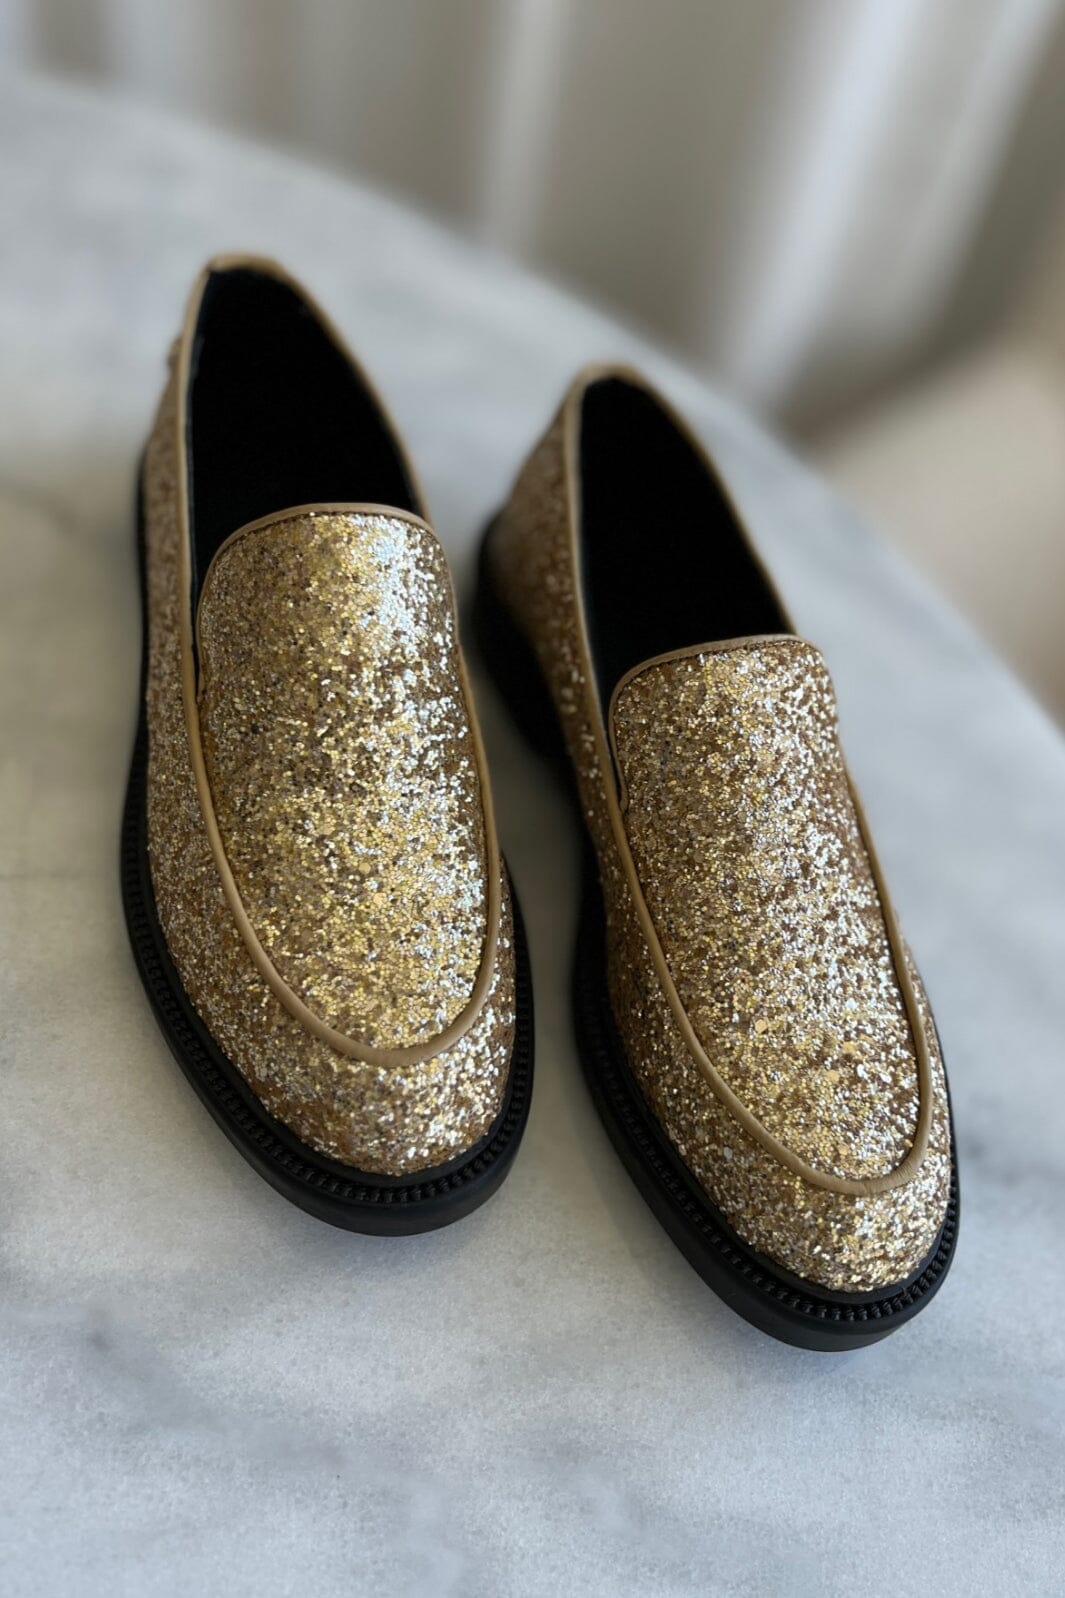 Copenhagen Shoes - Cphs Loafer - 2307 Gold Glitter Loafers 